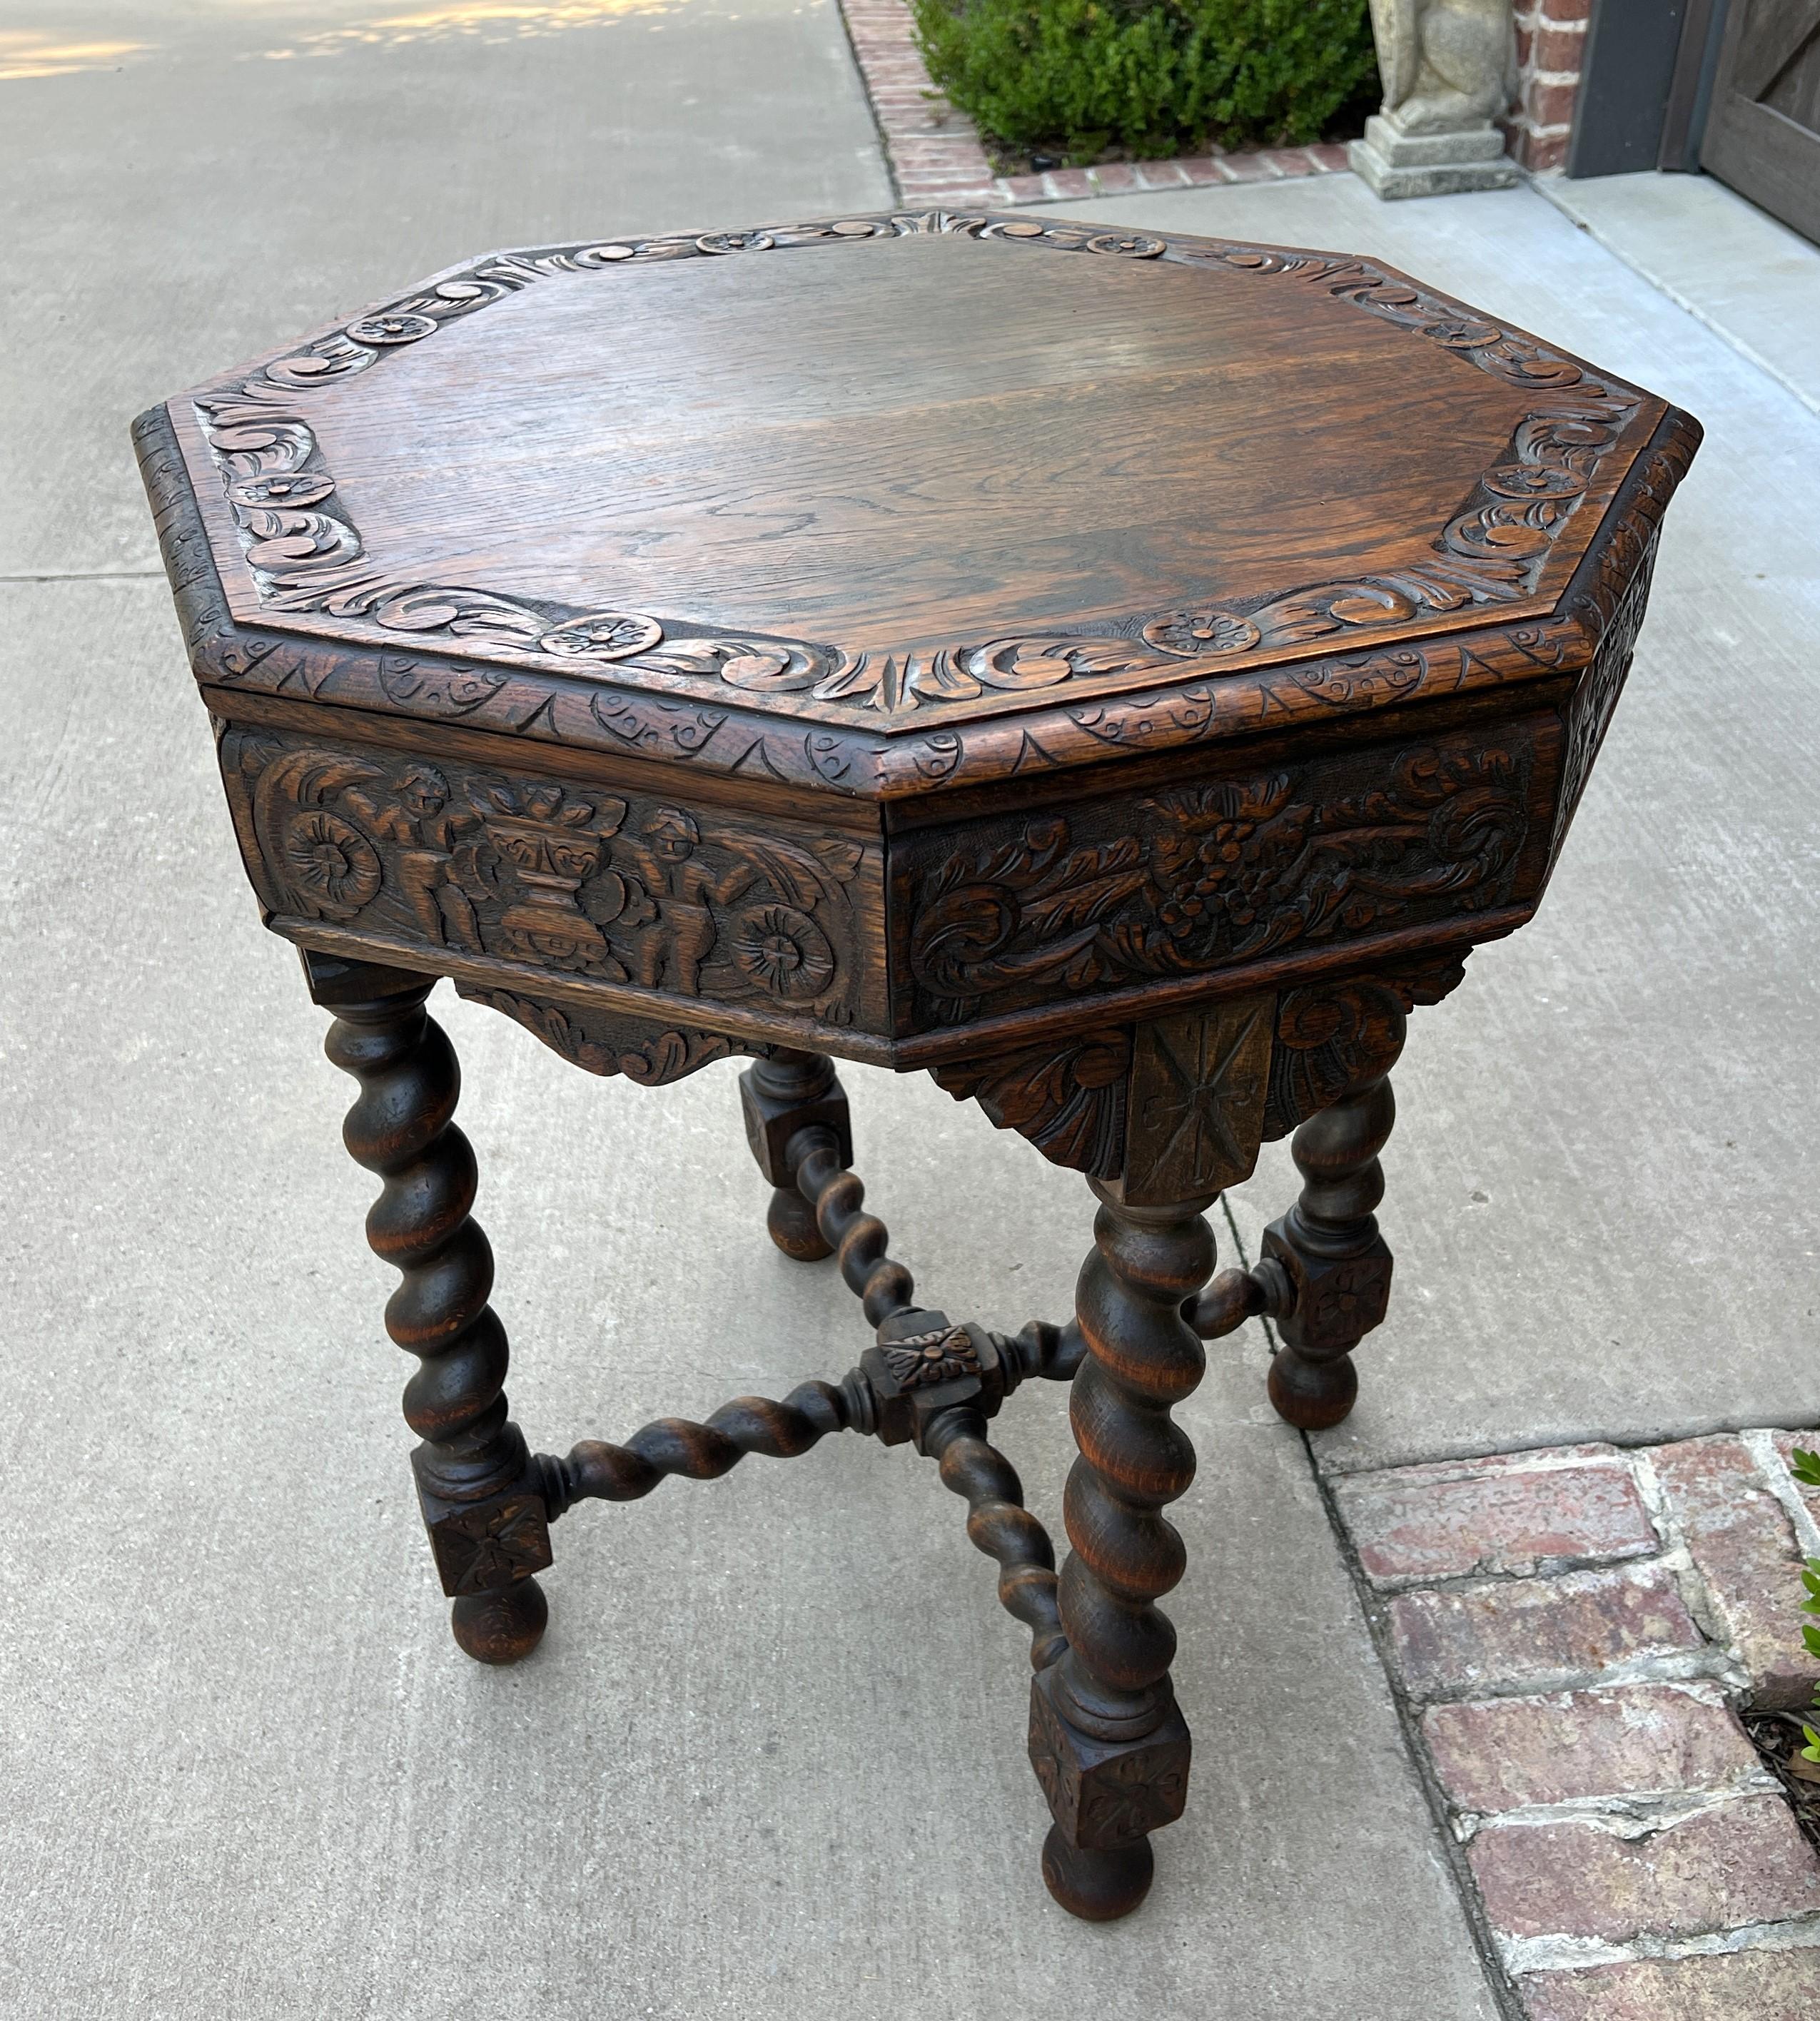 Antique French Table Barley Twist Octagonal Renaissance Revival Carved Oak 19thc For Sale 6